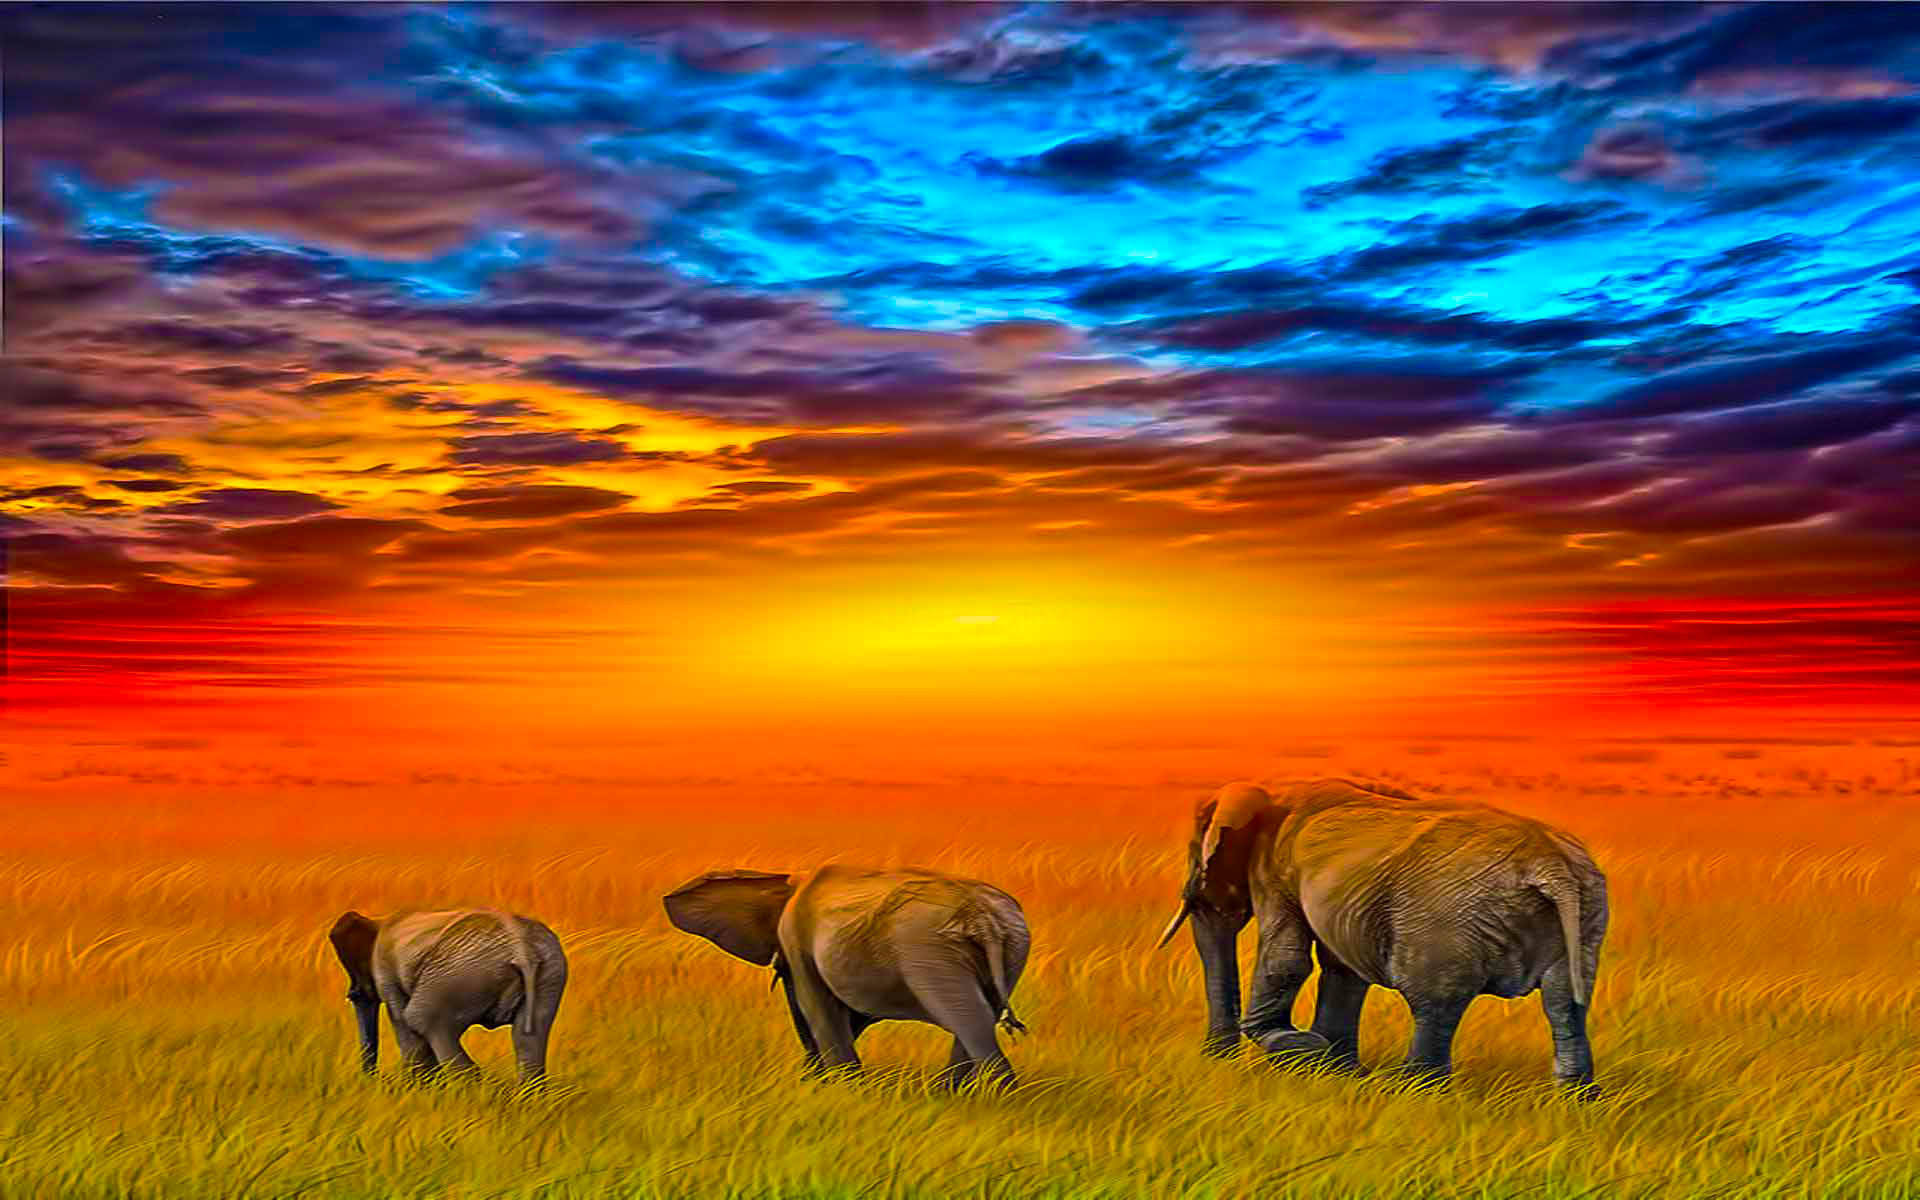 Elephants In Africa Digital Art Picture